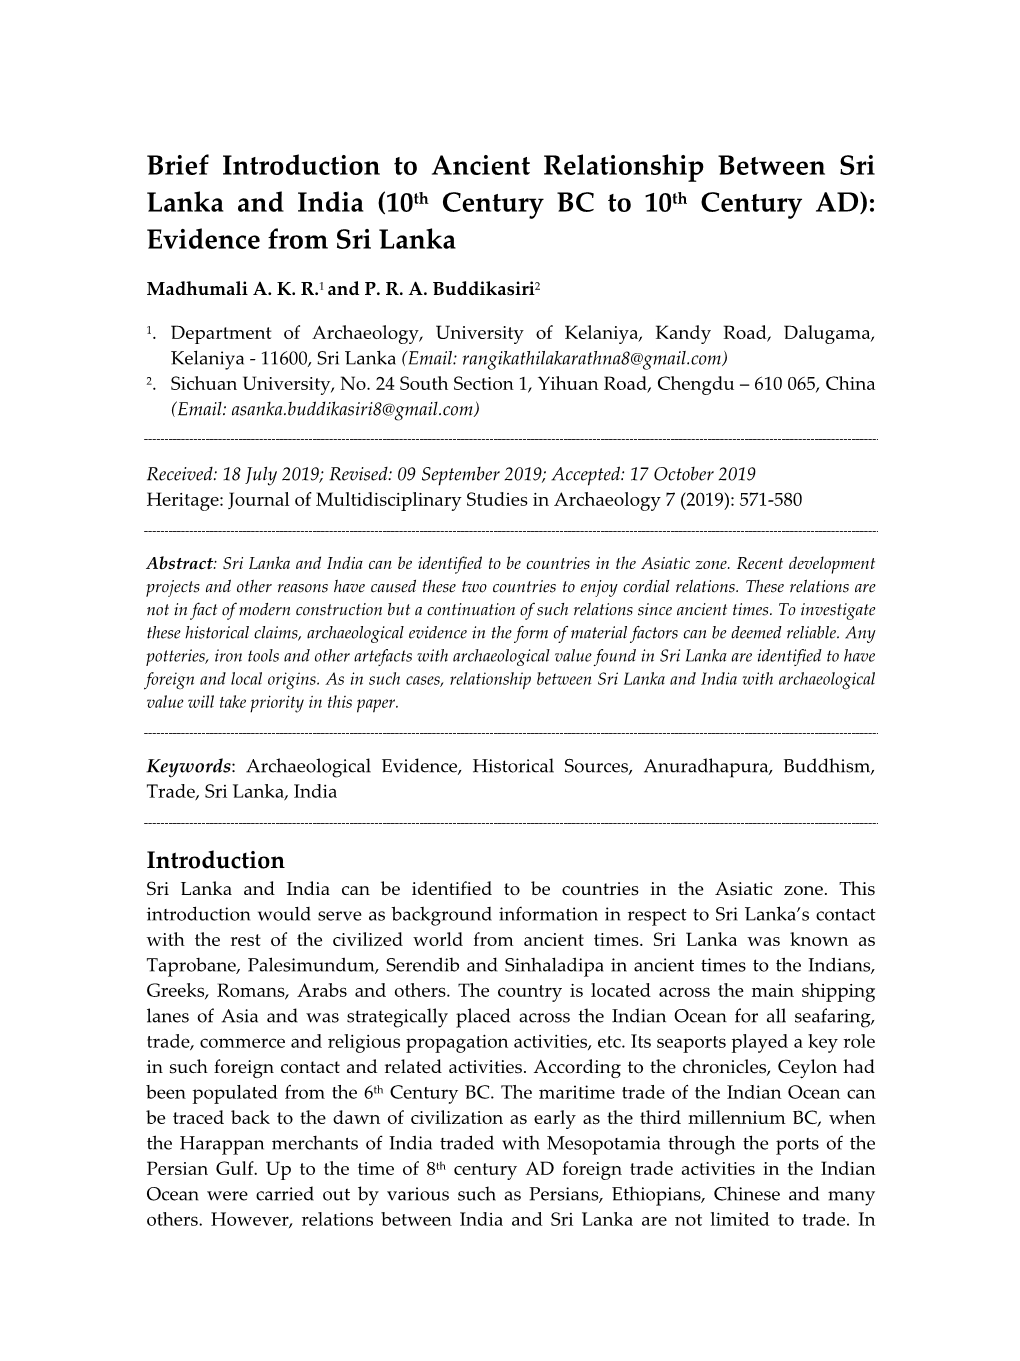 10Th Century BC to 10Th Century AD): Evidence from Sri Lanka